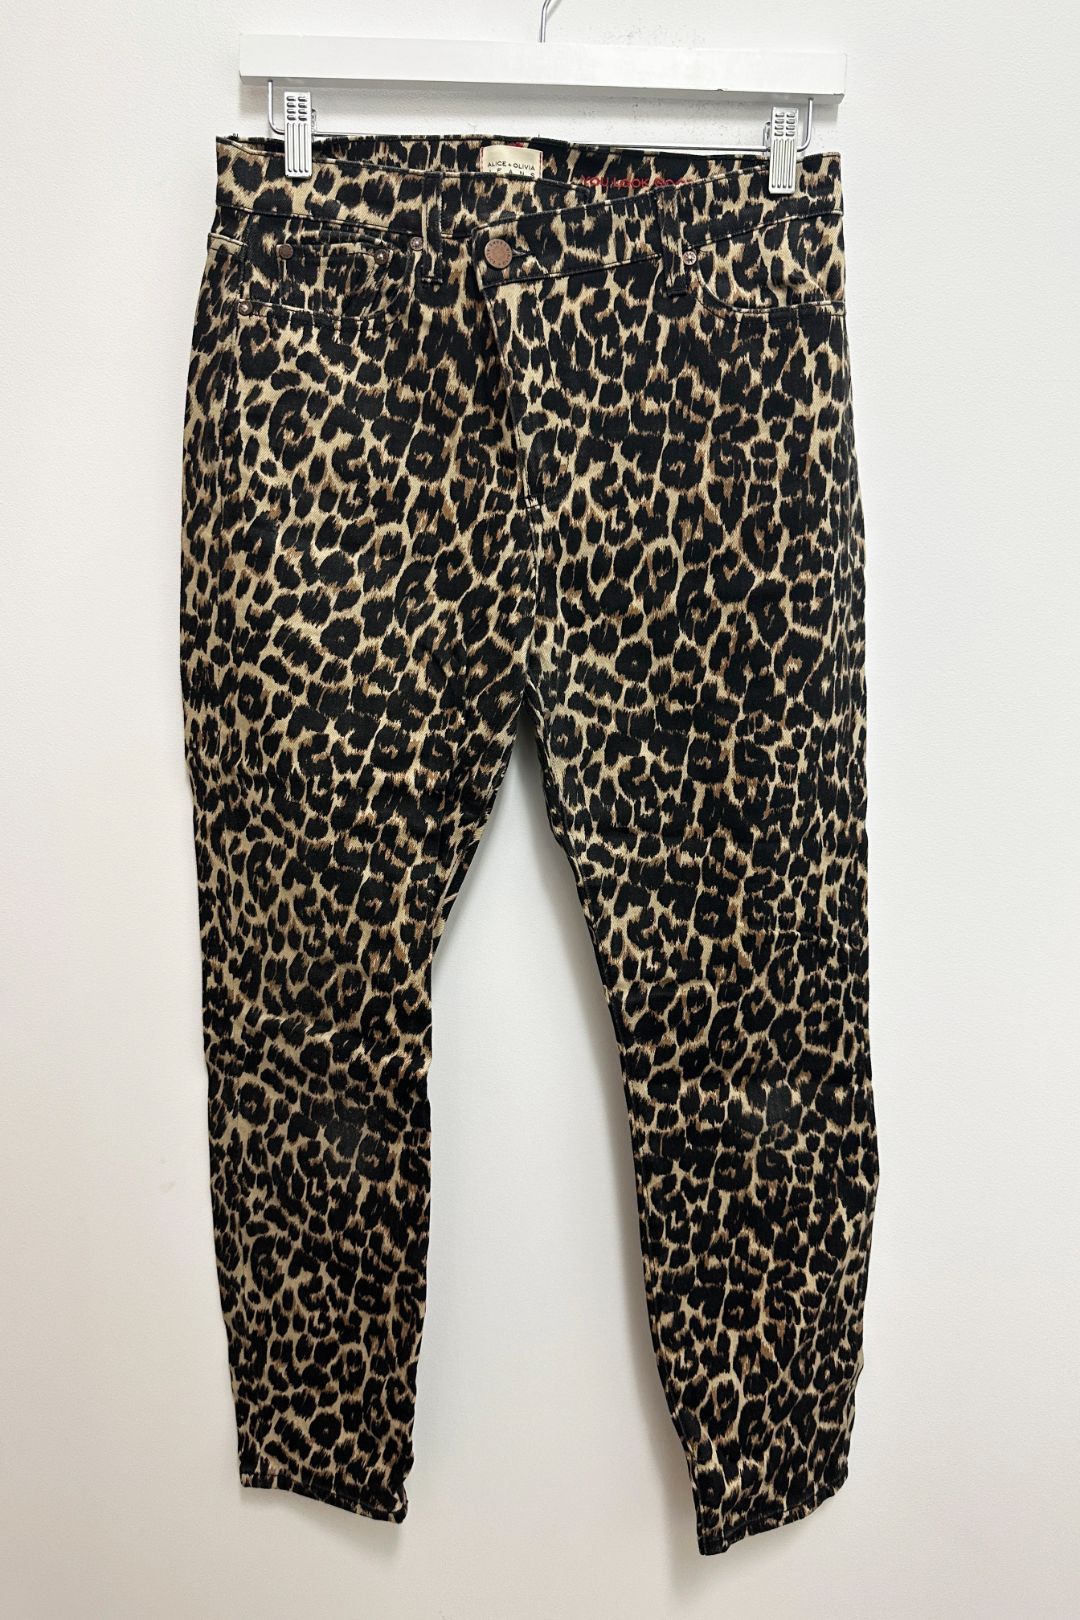 Alice And Olivia Skinny Jeans in Leopard Print